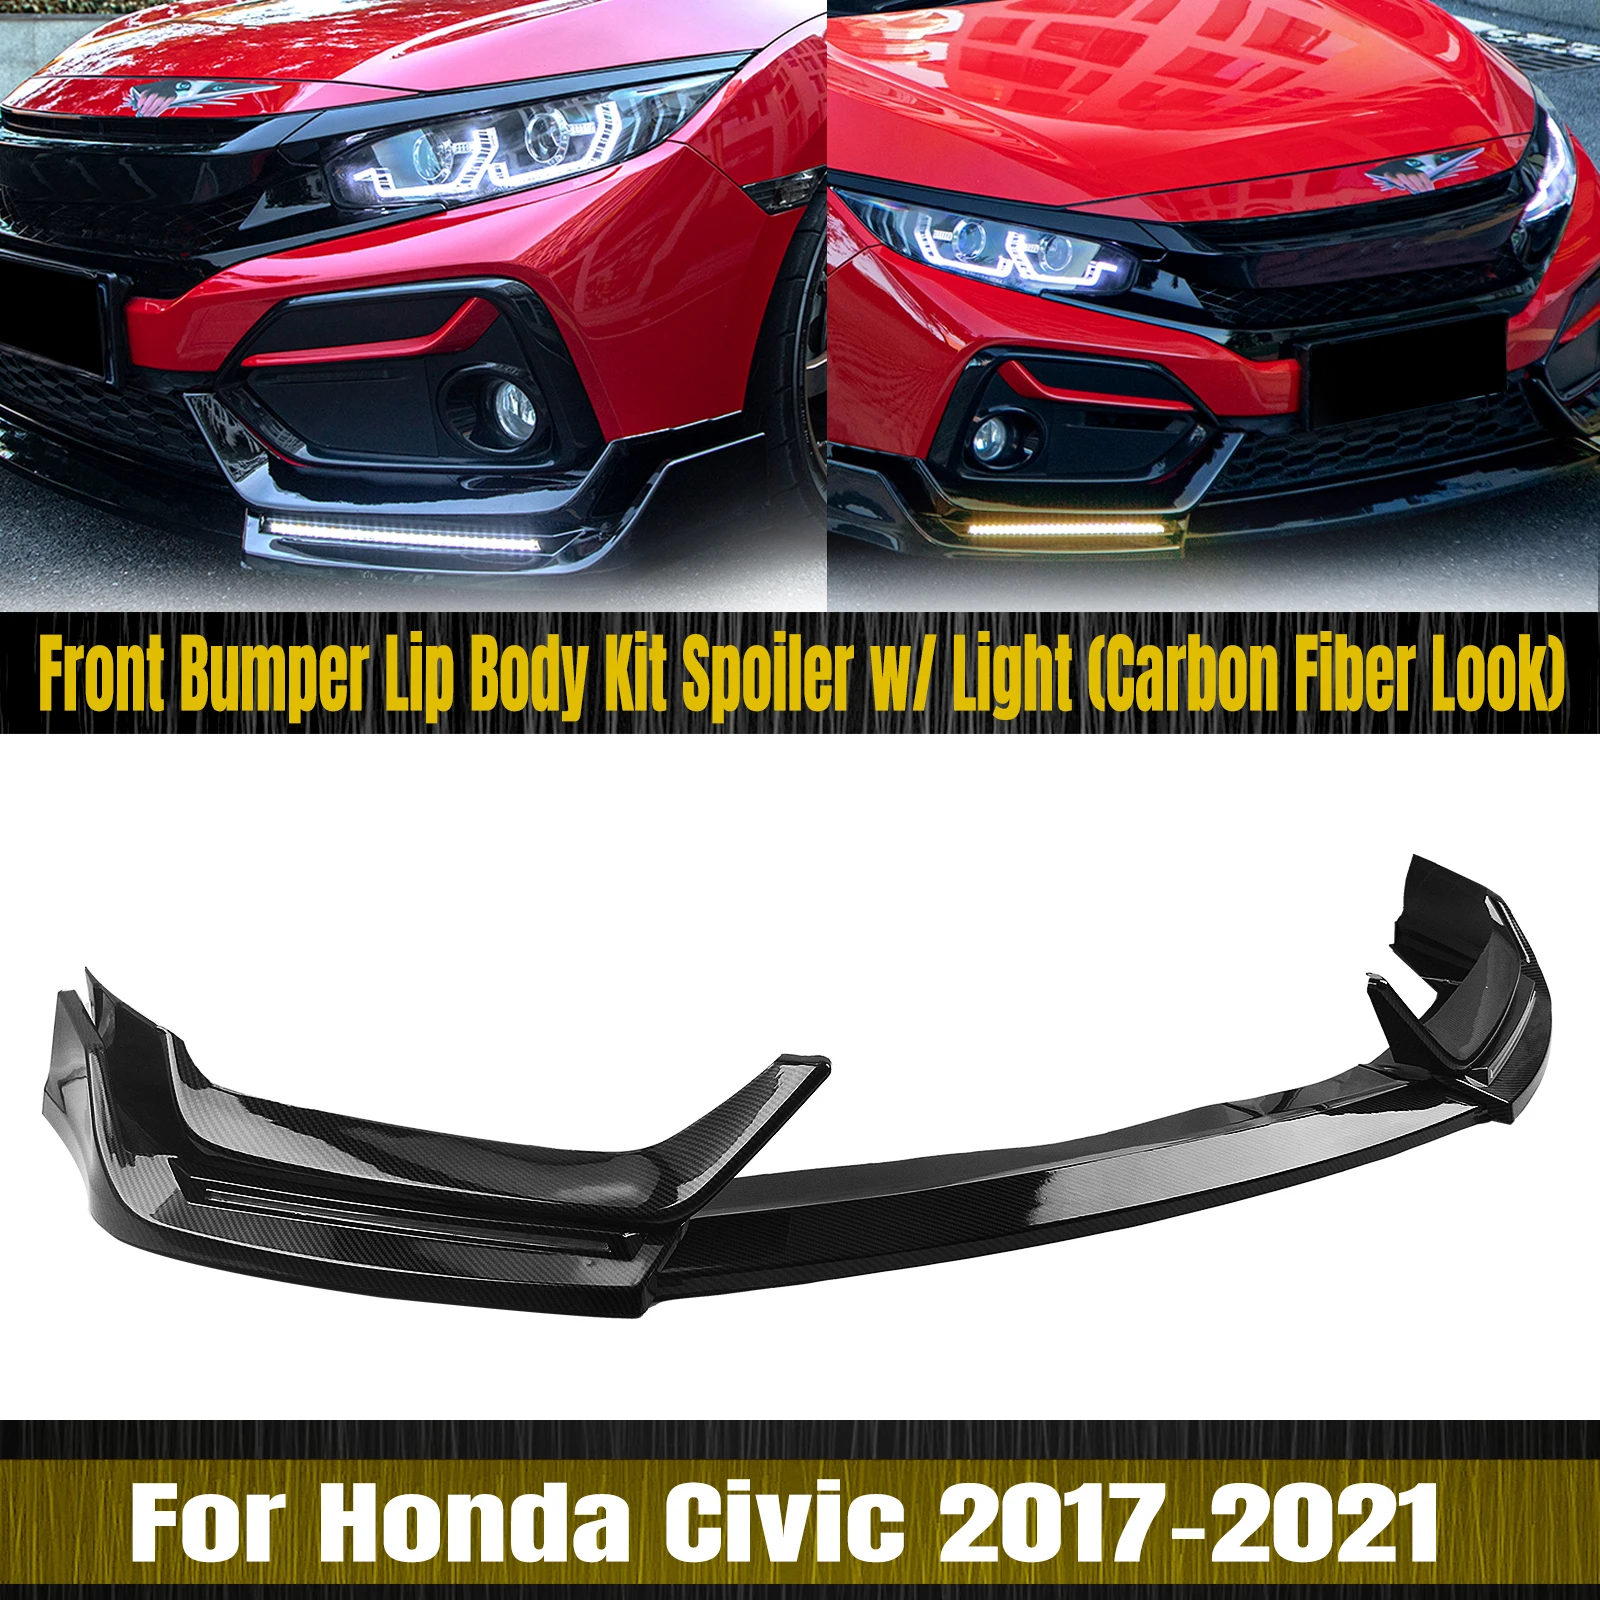 

Front Bumper Spoiler Lip For Honda Civic Si Hatchback 2017-2021 Carbon Fiber Look Car Lower Guard Plate Splitter Blade W/ Light